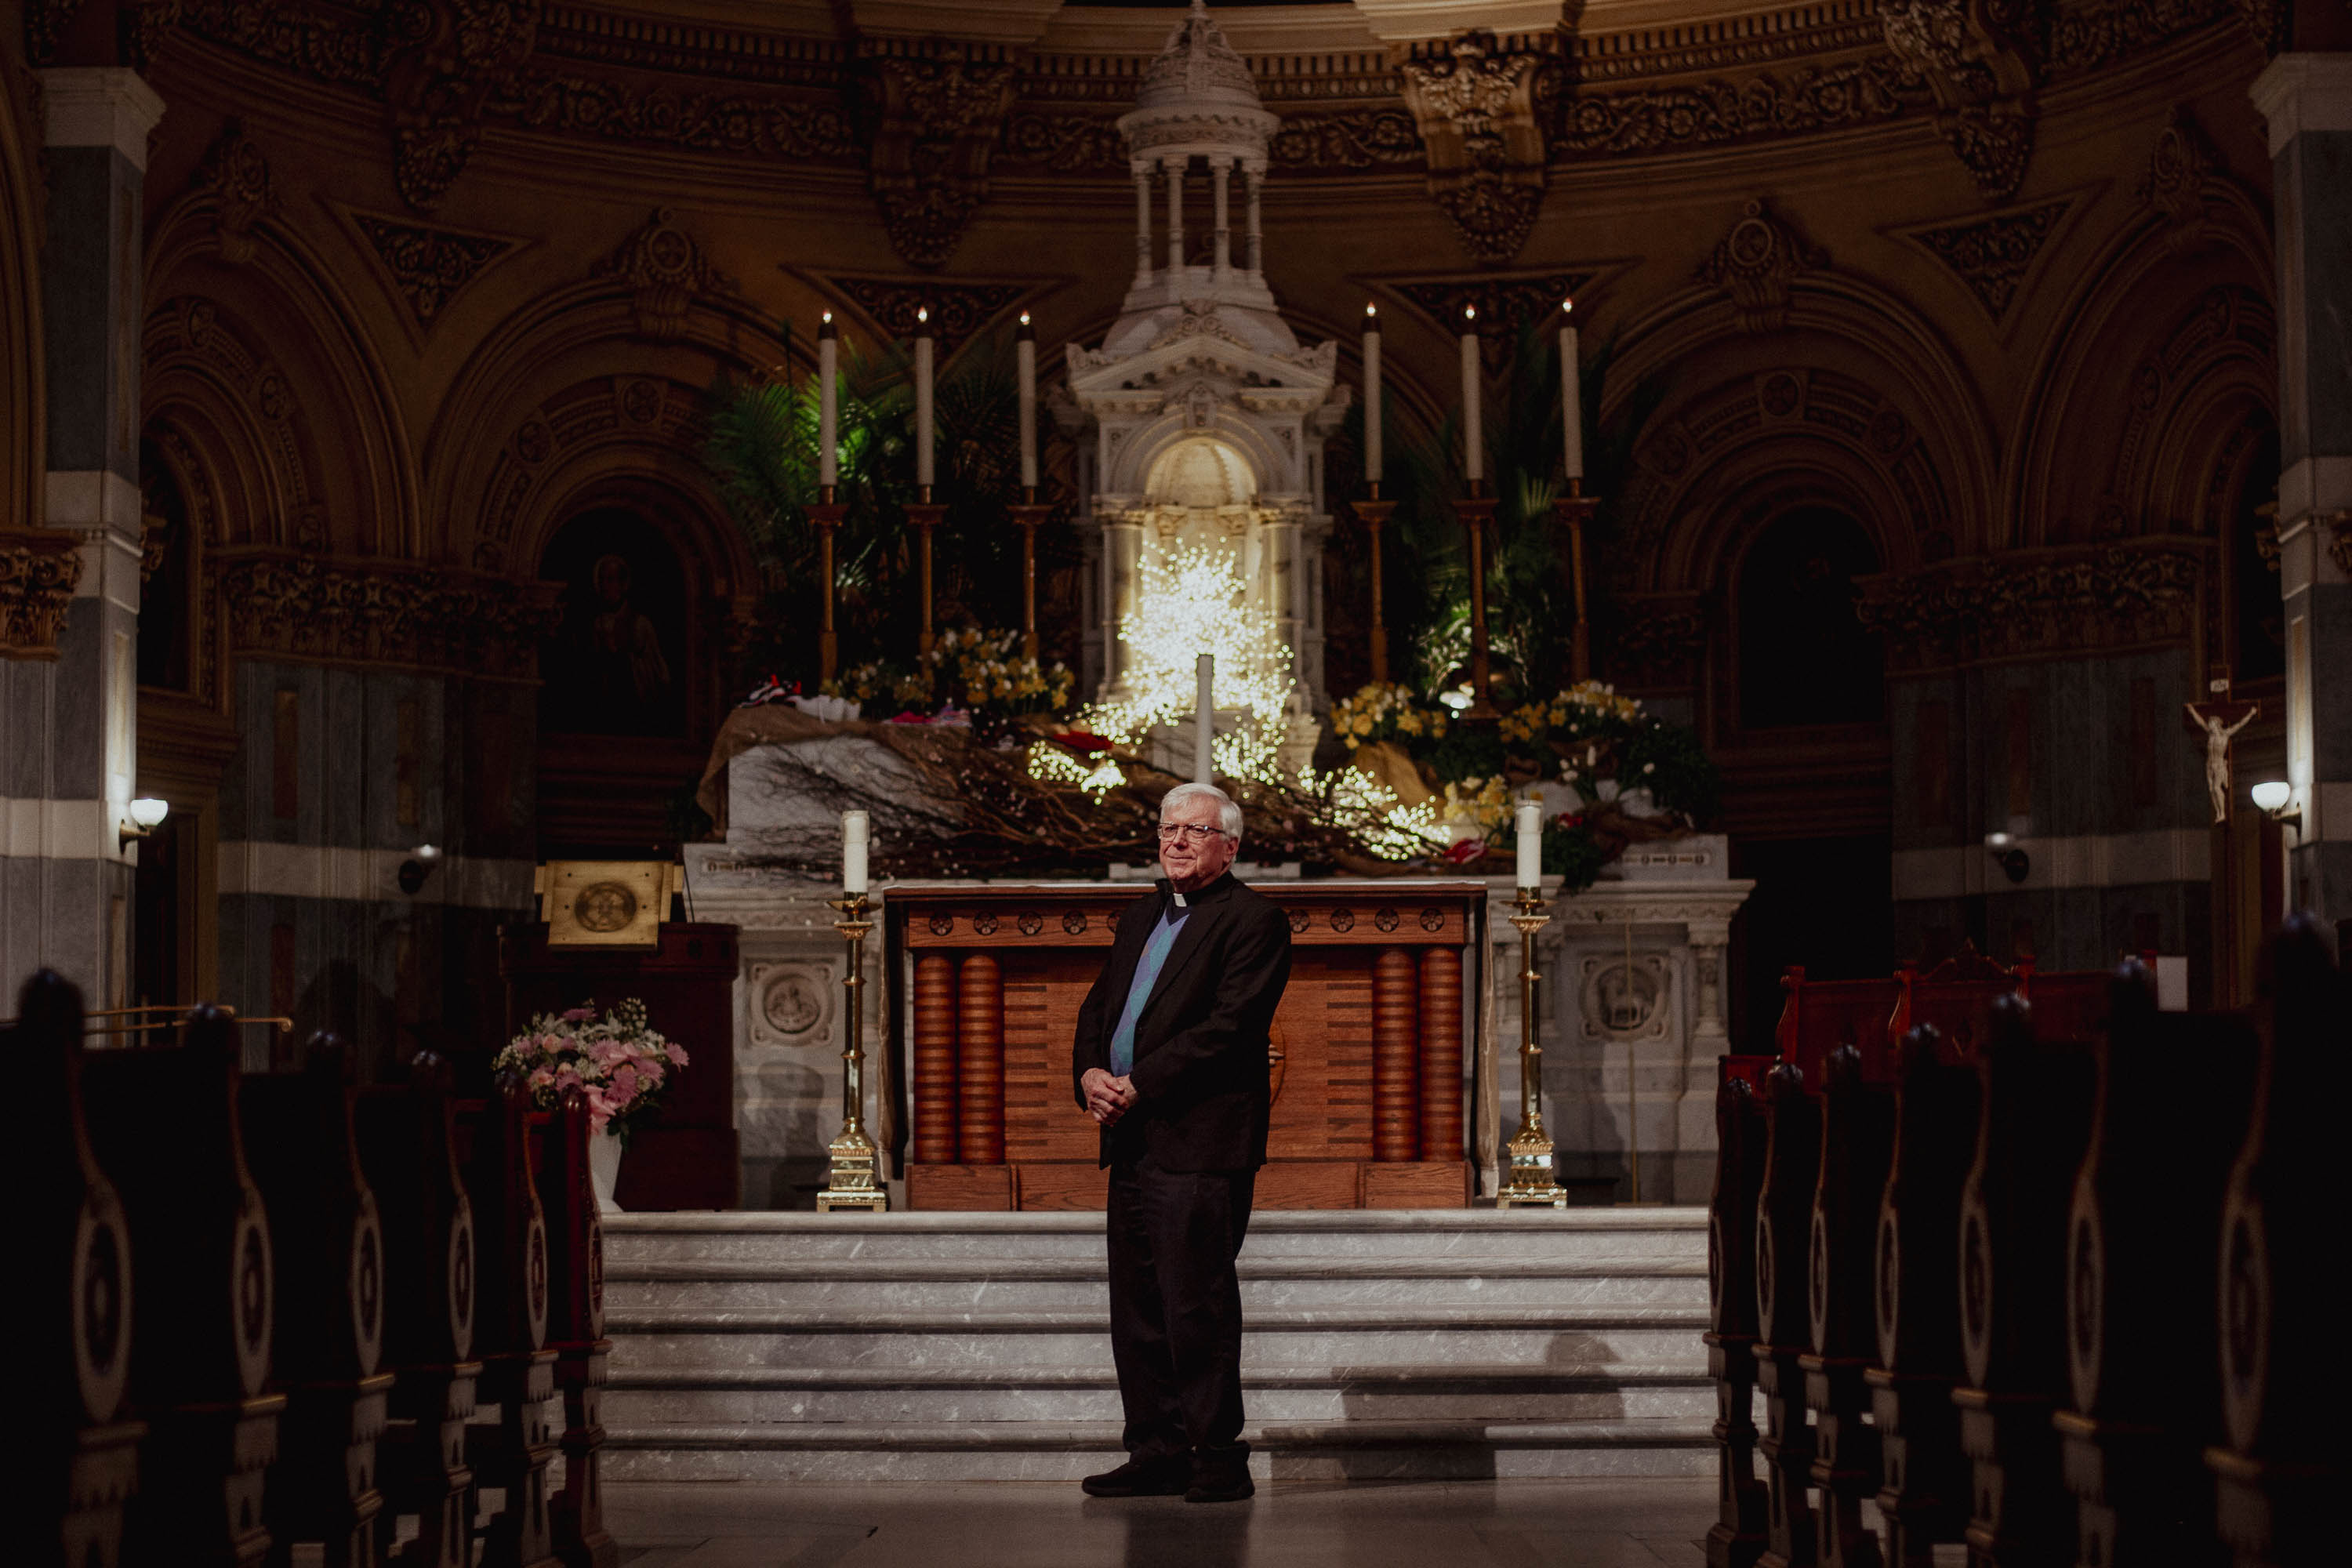 A man poses inside a church